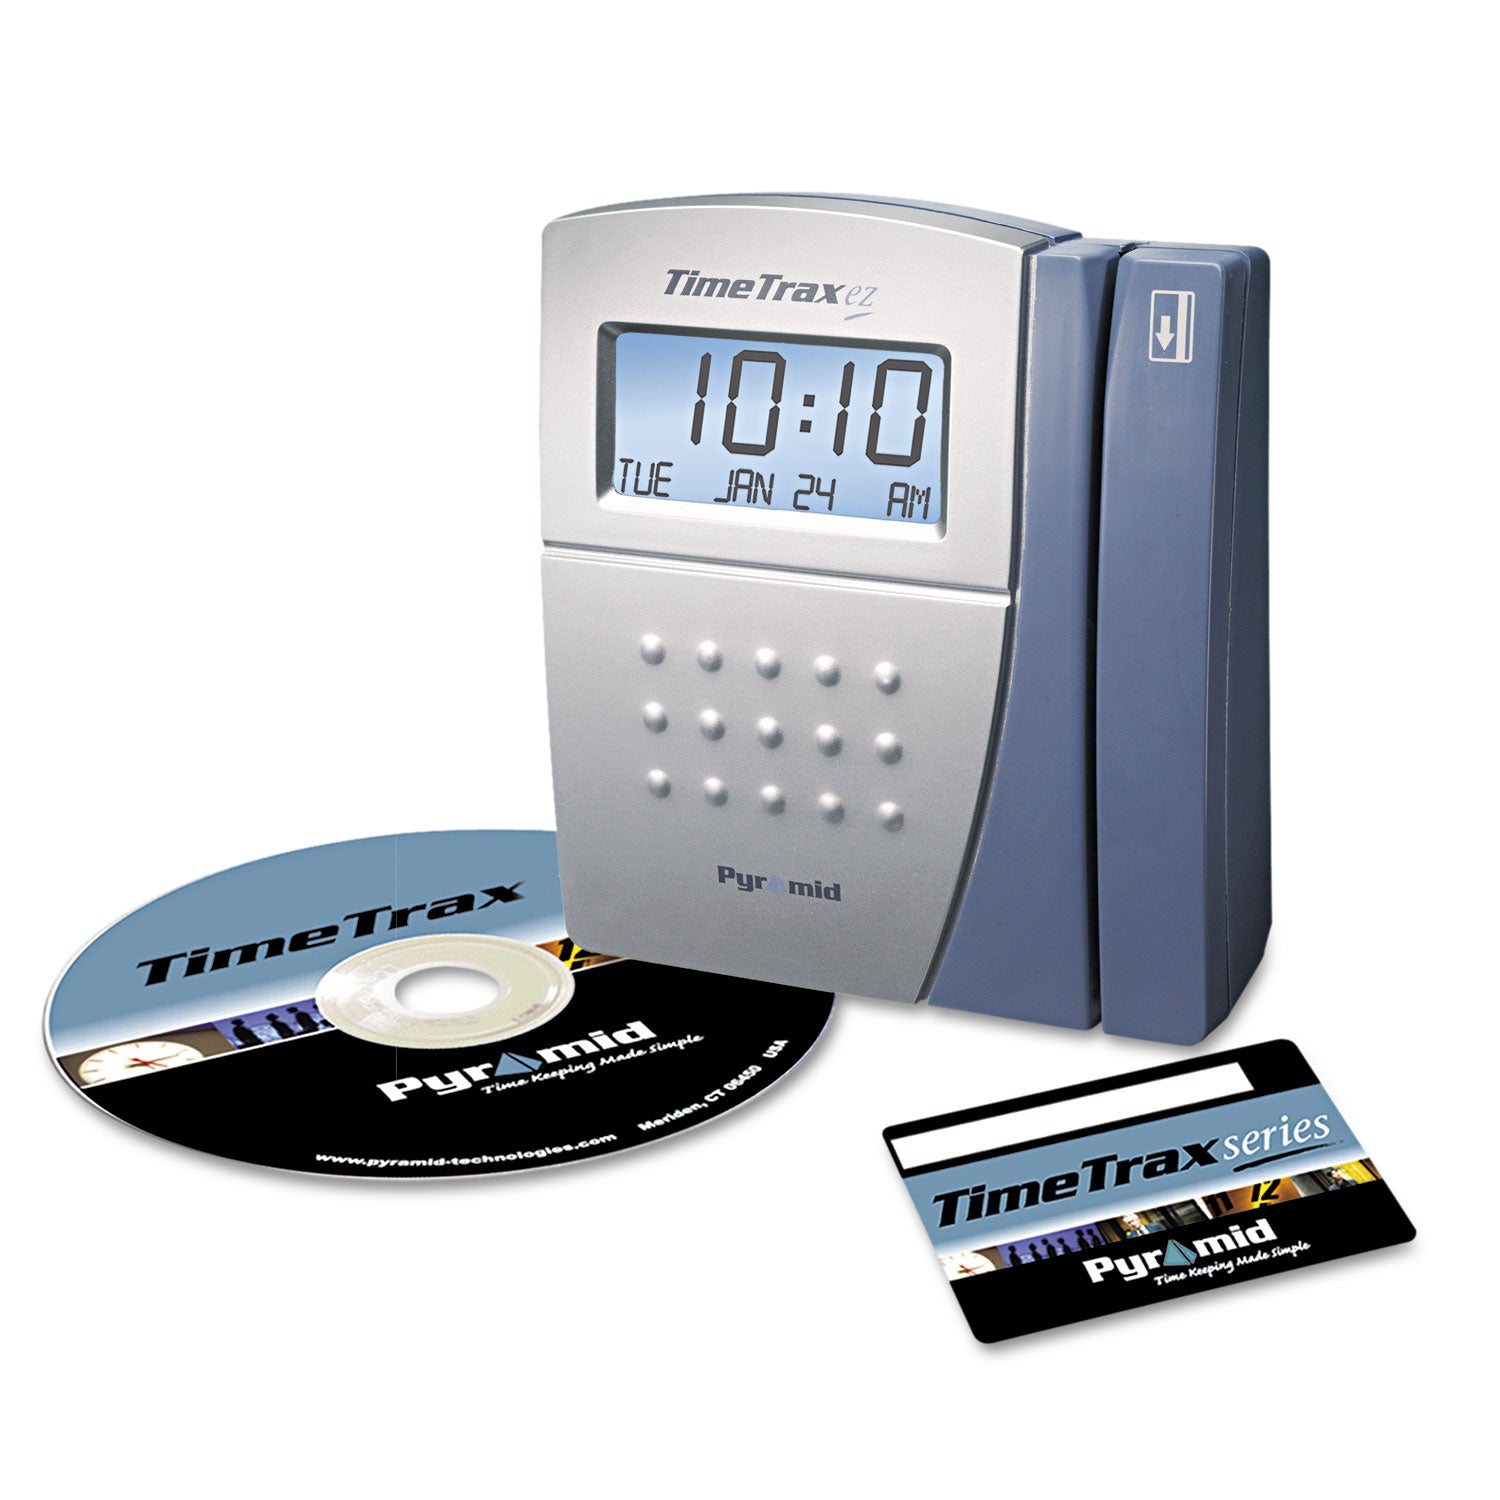 timetrax-ez-time-and-attendance-system-digital-display-black_ptittezek - 3